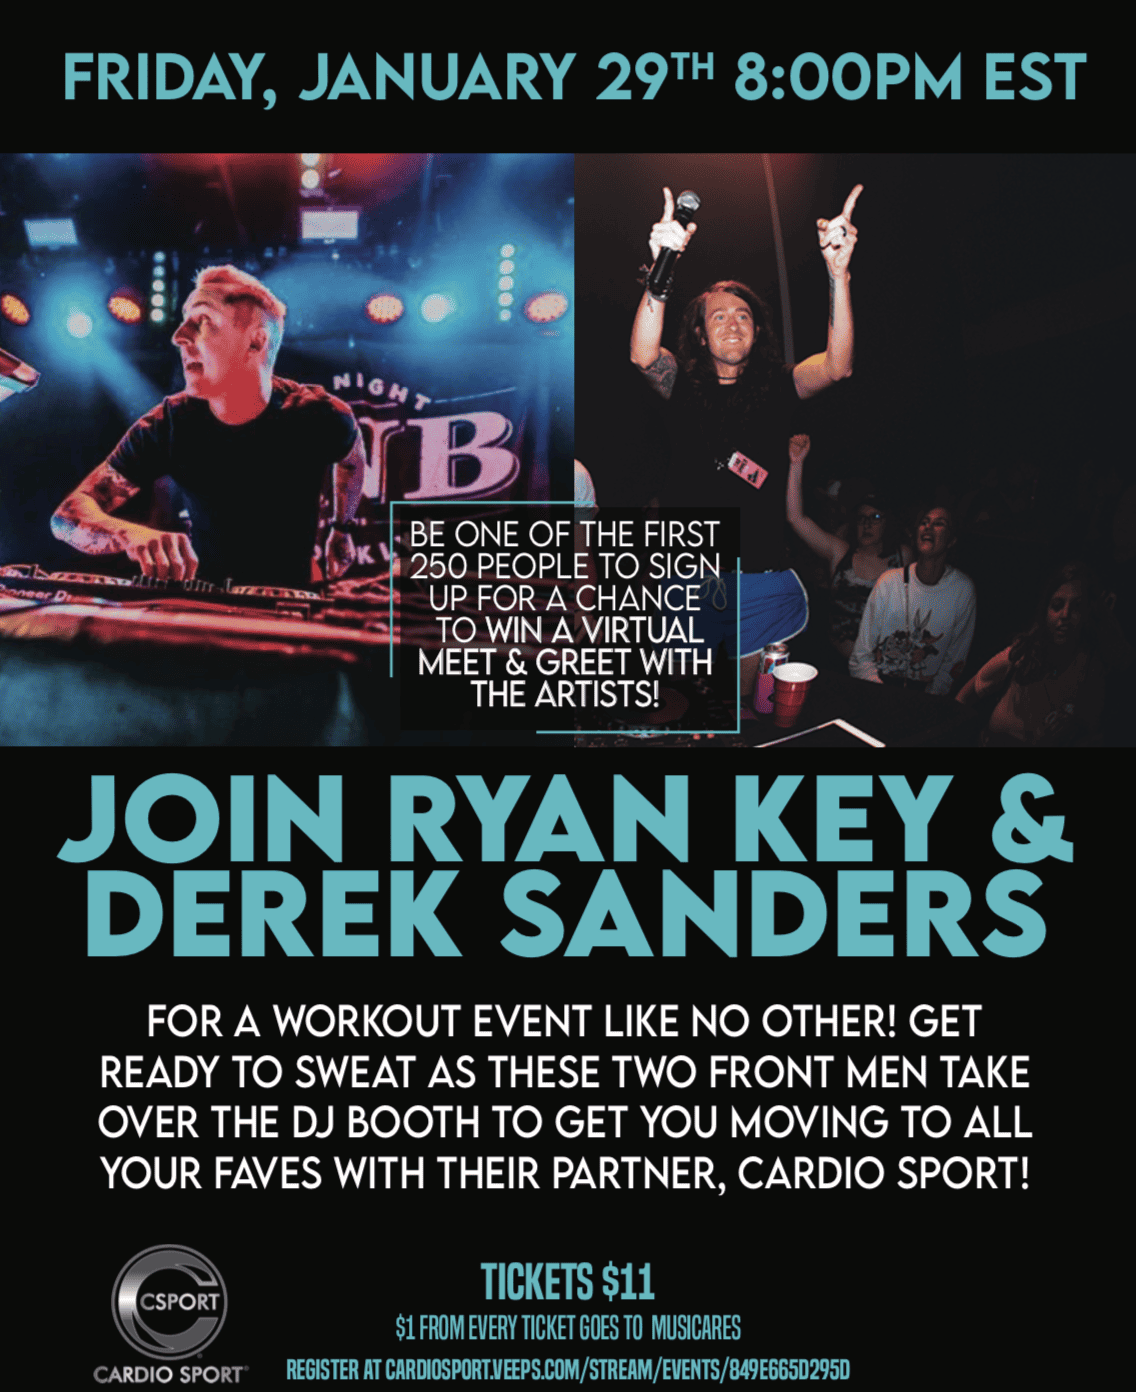 Ryan Key and Derek Sanders host Cardio Sport workout